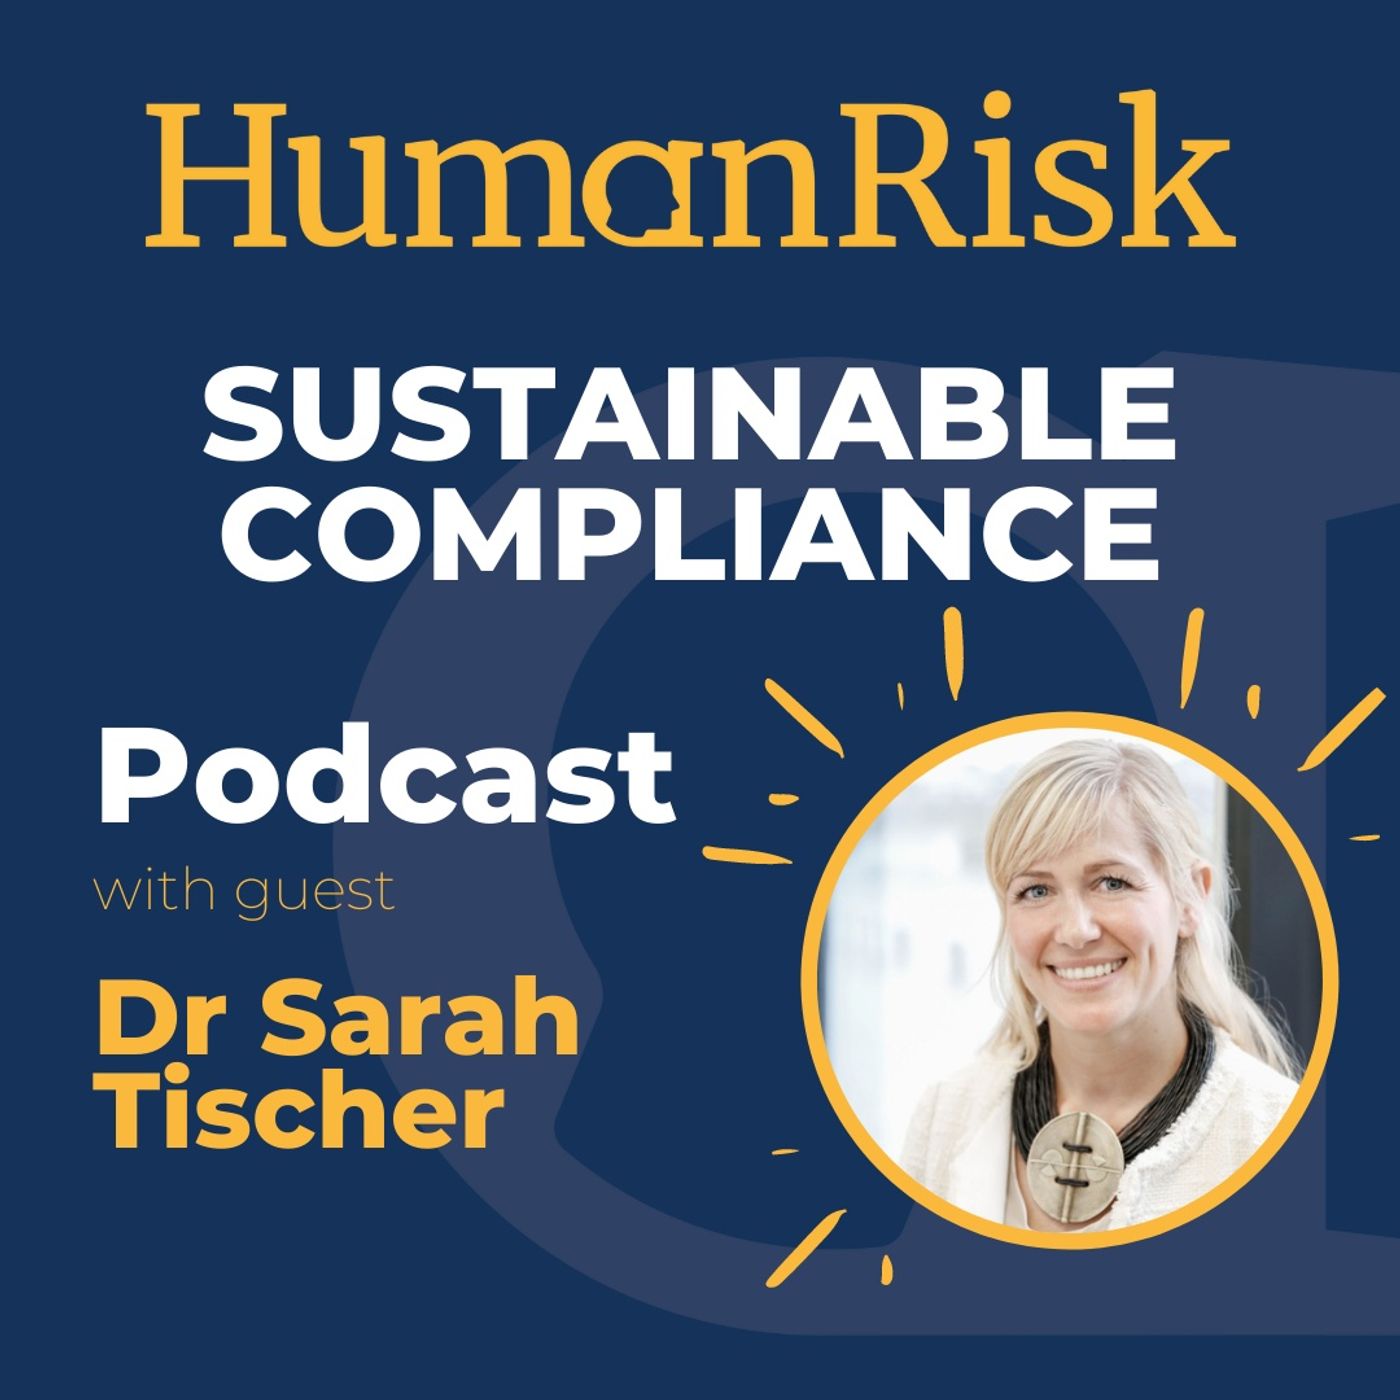 Dr Sarah Tischer on Sustainable Compliance